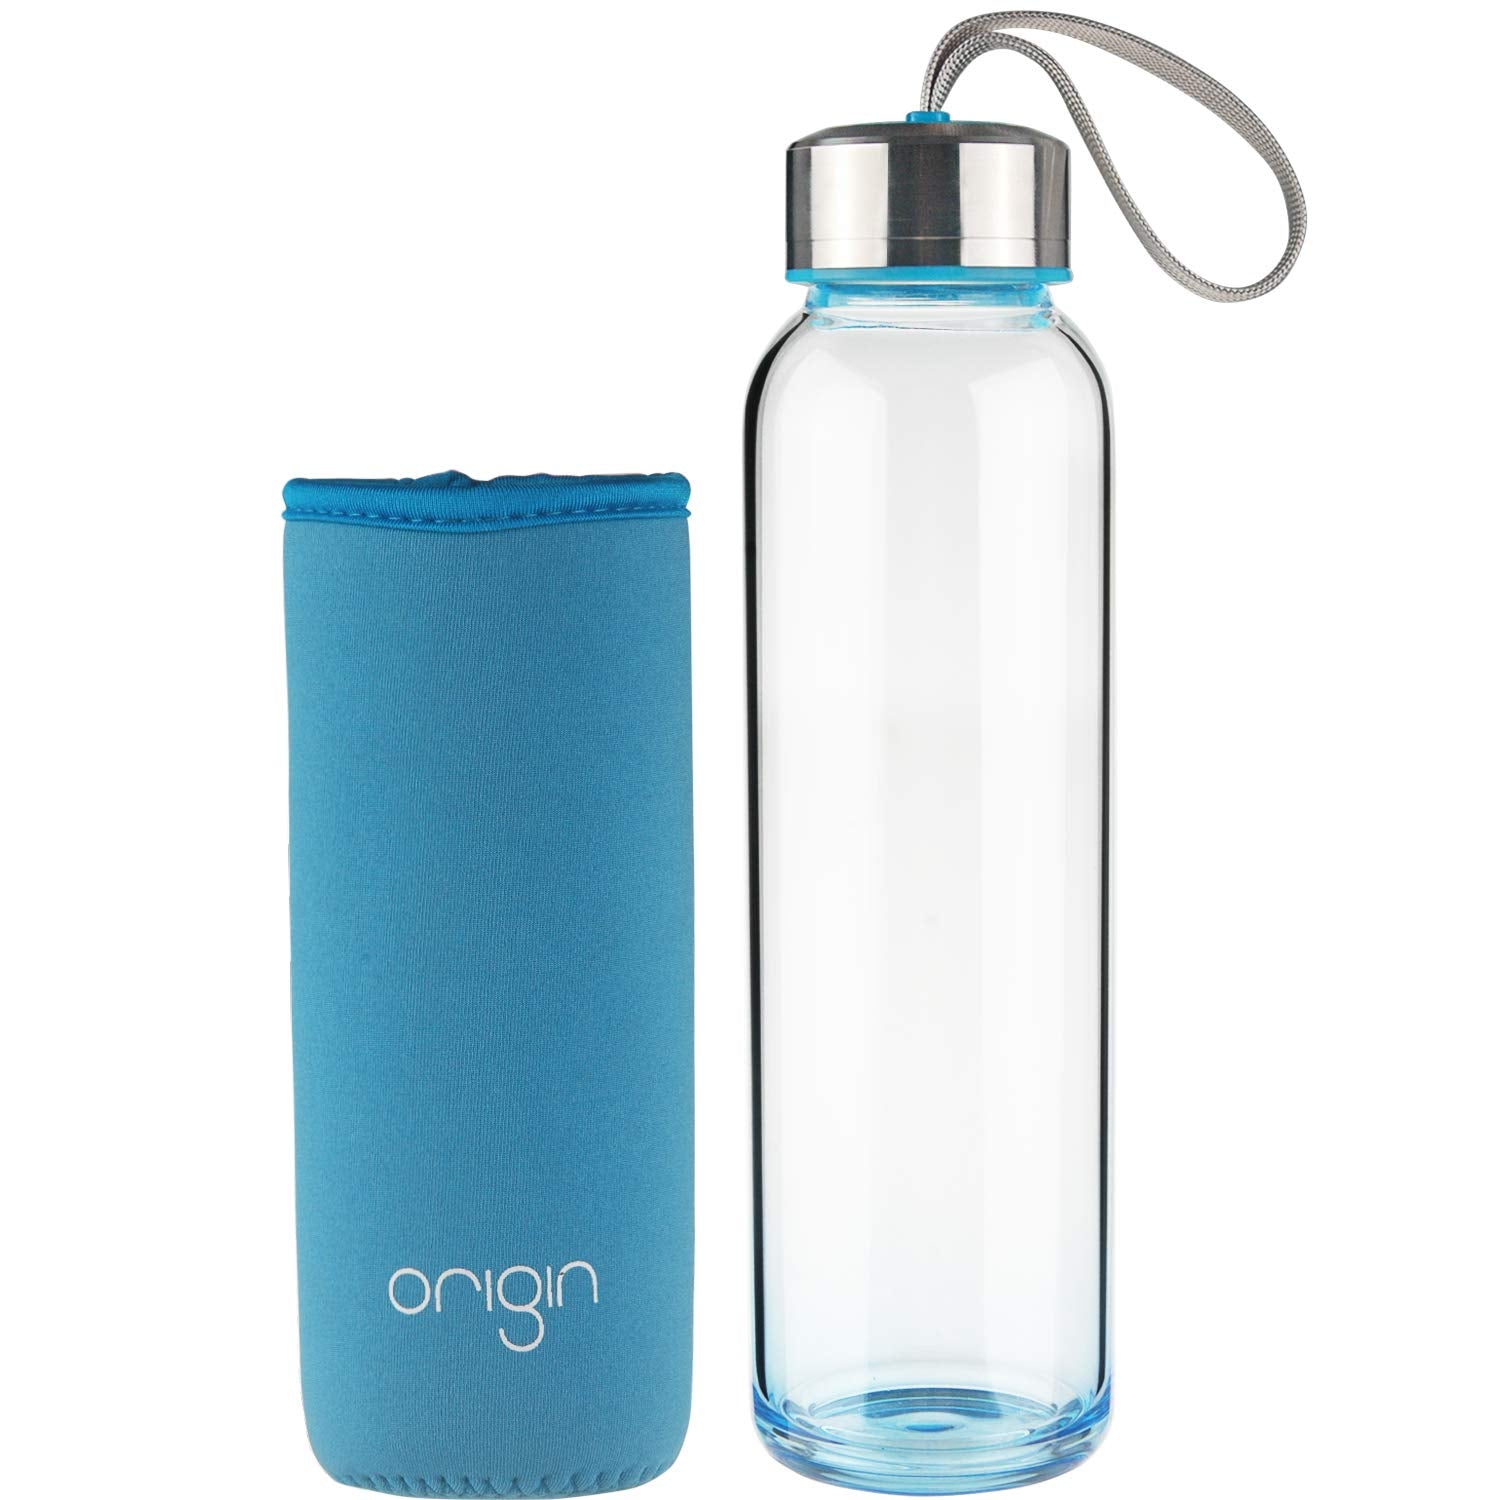 Reusable Glass Water Bottle With Anti Slip Cork Sleeve Cover, Leak Proof  Cap, Borosicilate, BPA & Plastic Free, Eco-friendly Gift, Christmas 